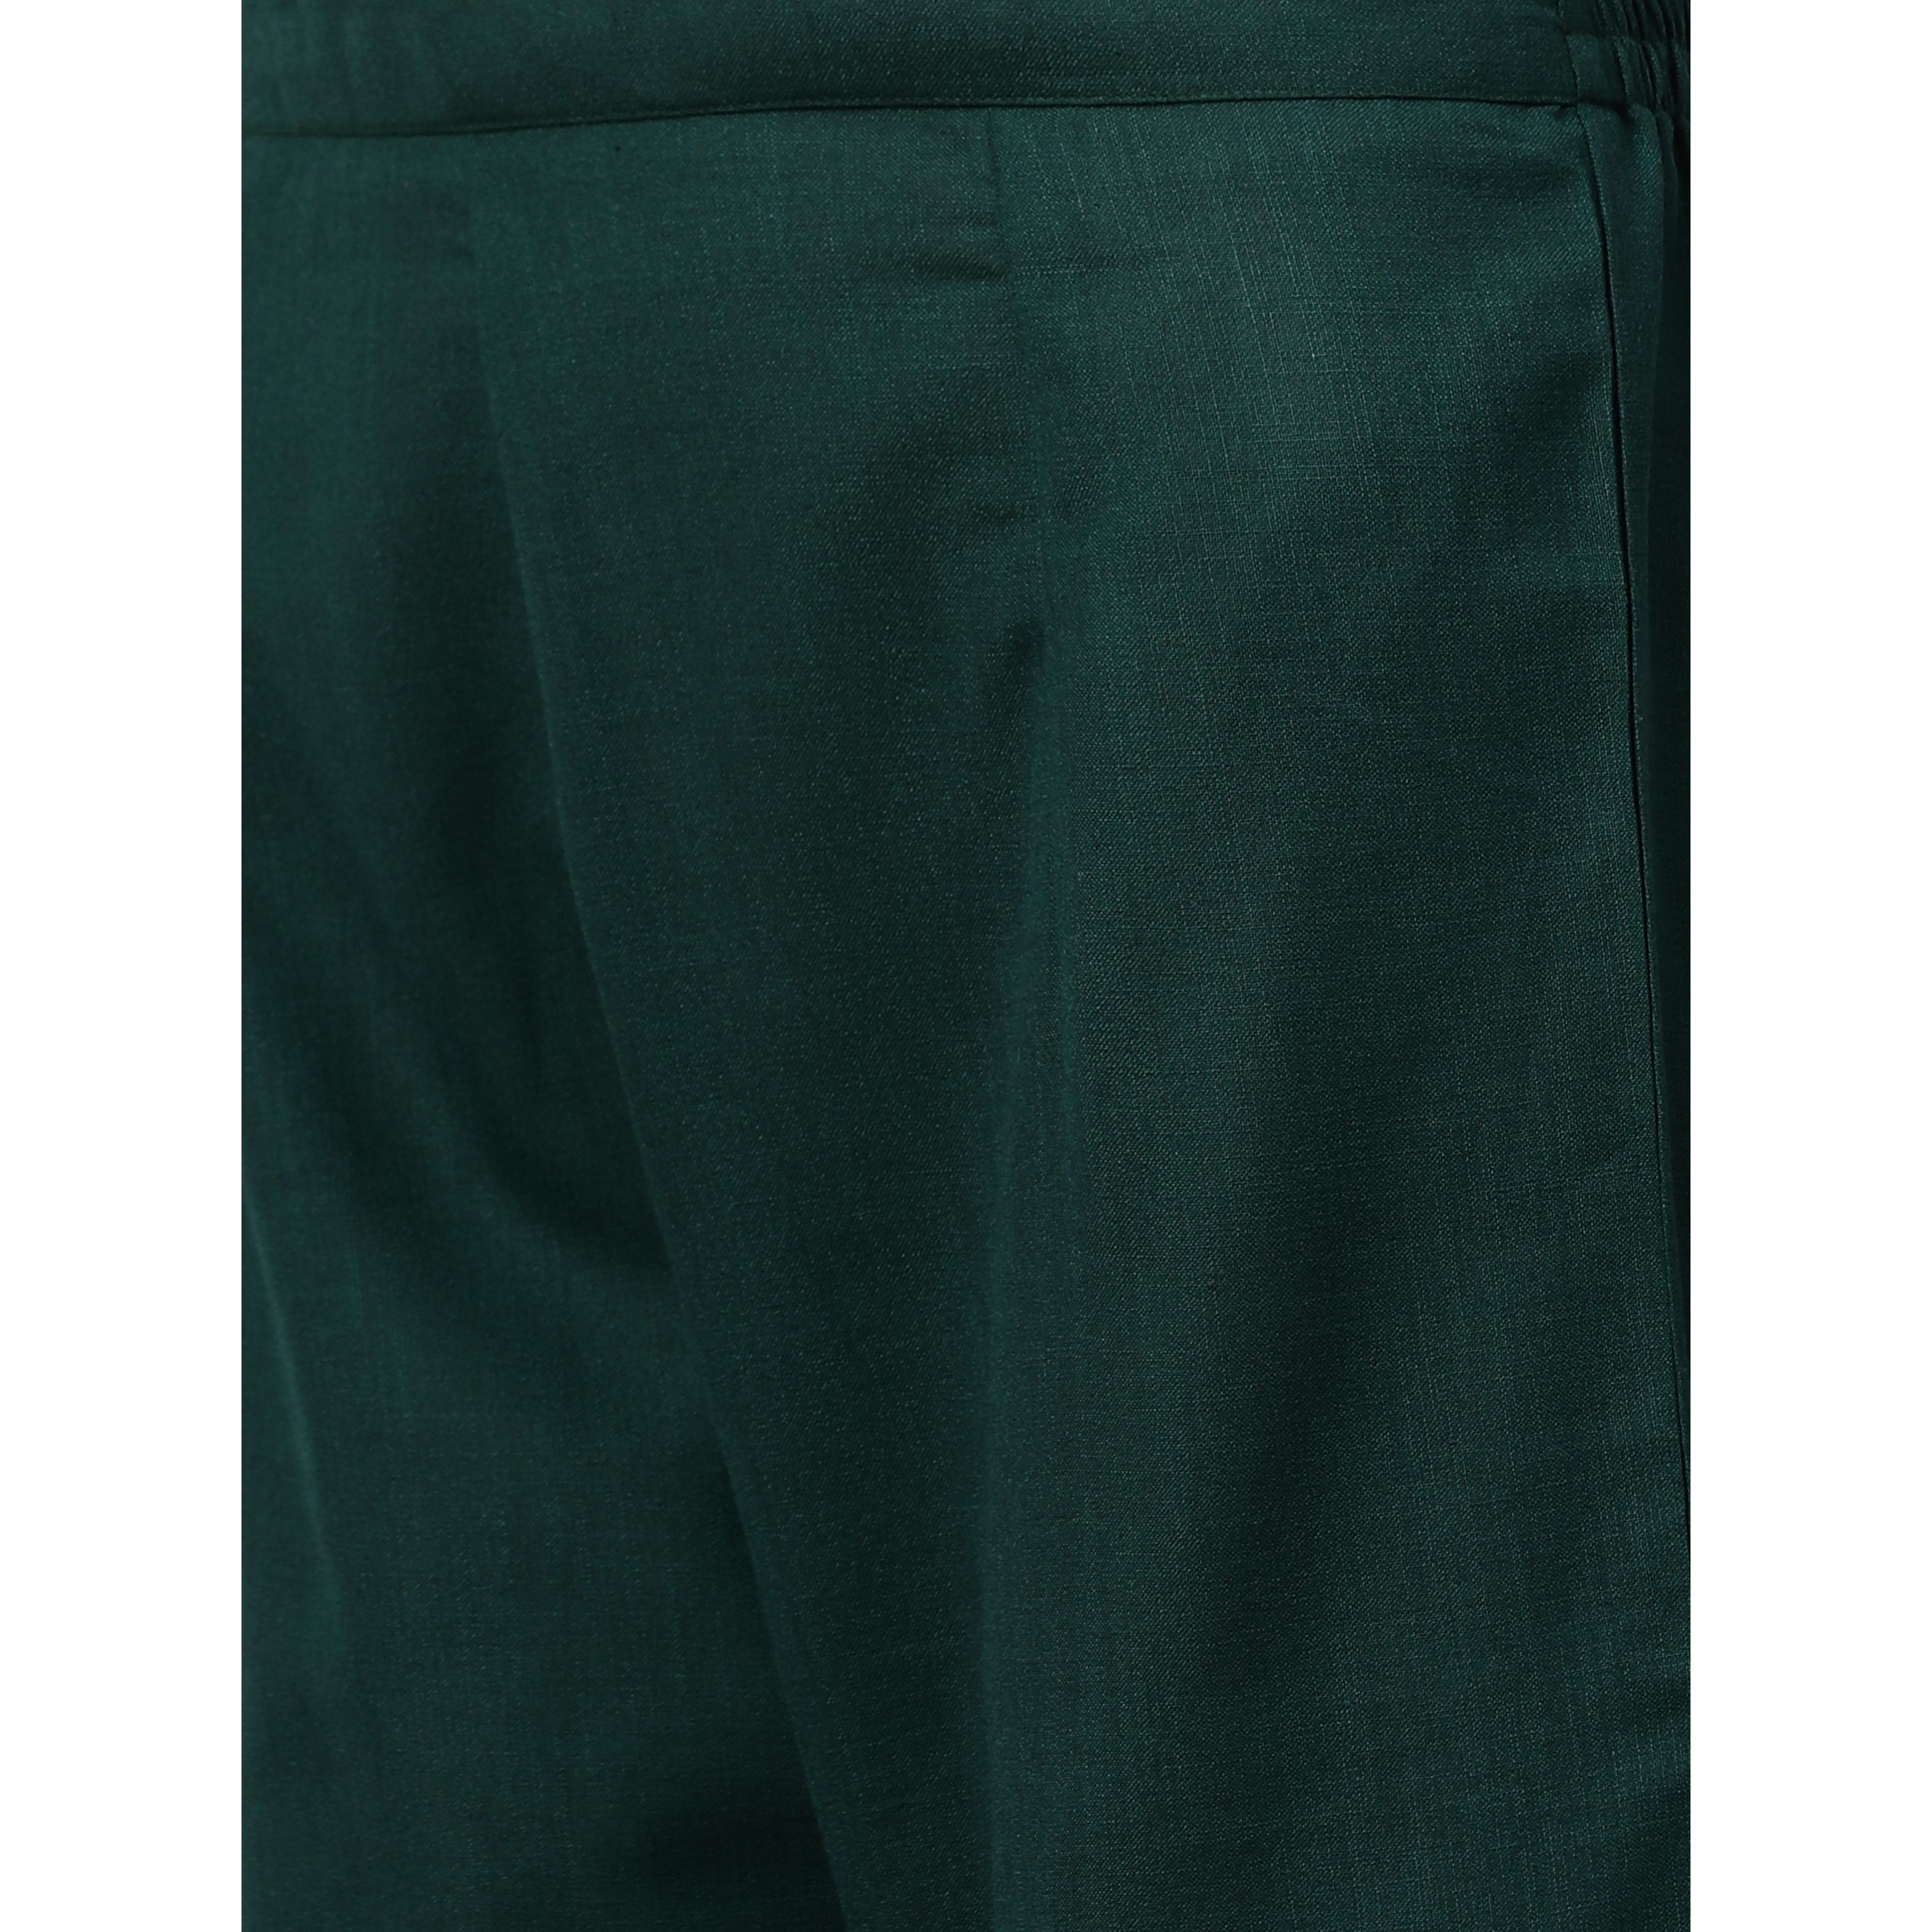 Indo Era - Green Solid Straight Kurta Palazzo with Dupatta Set - Peachmode